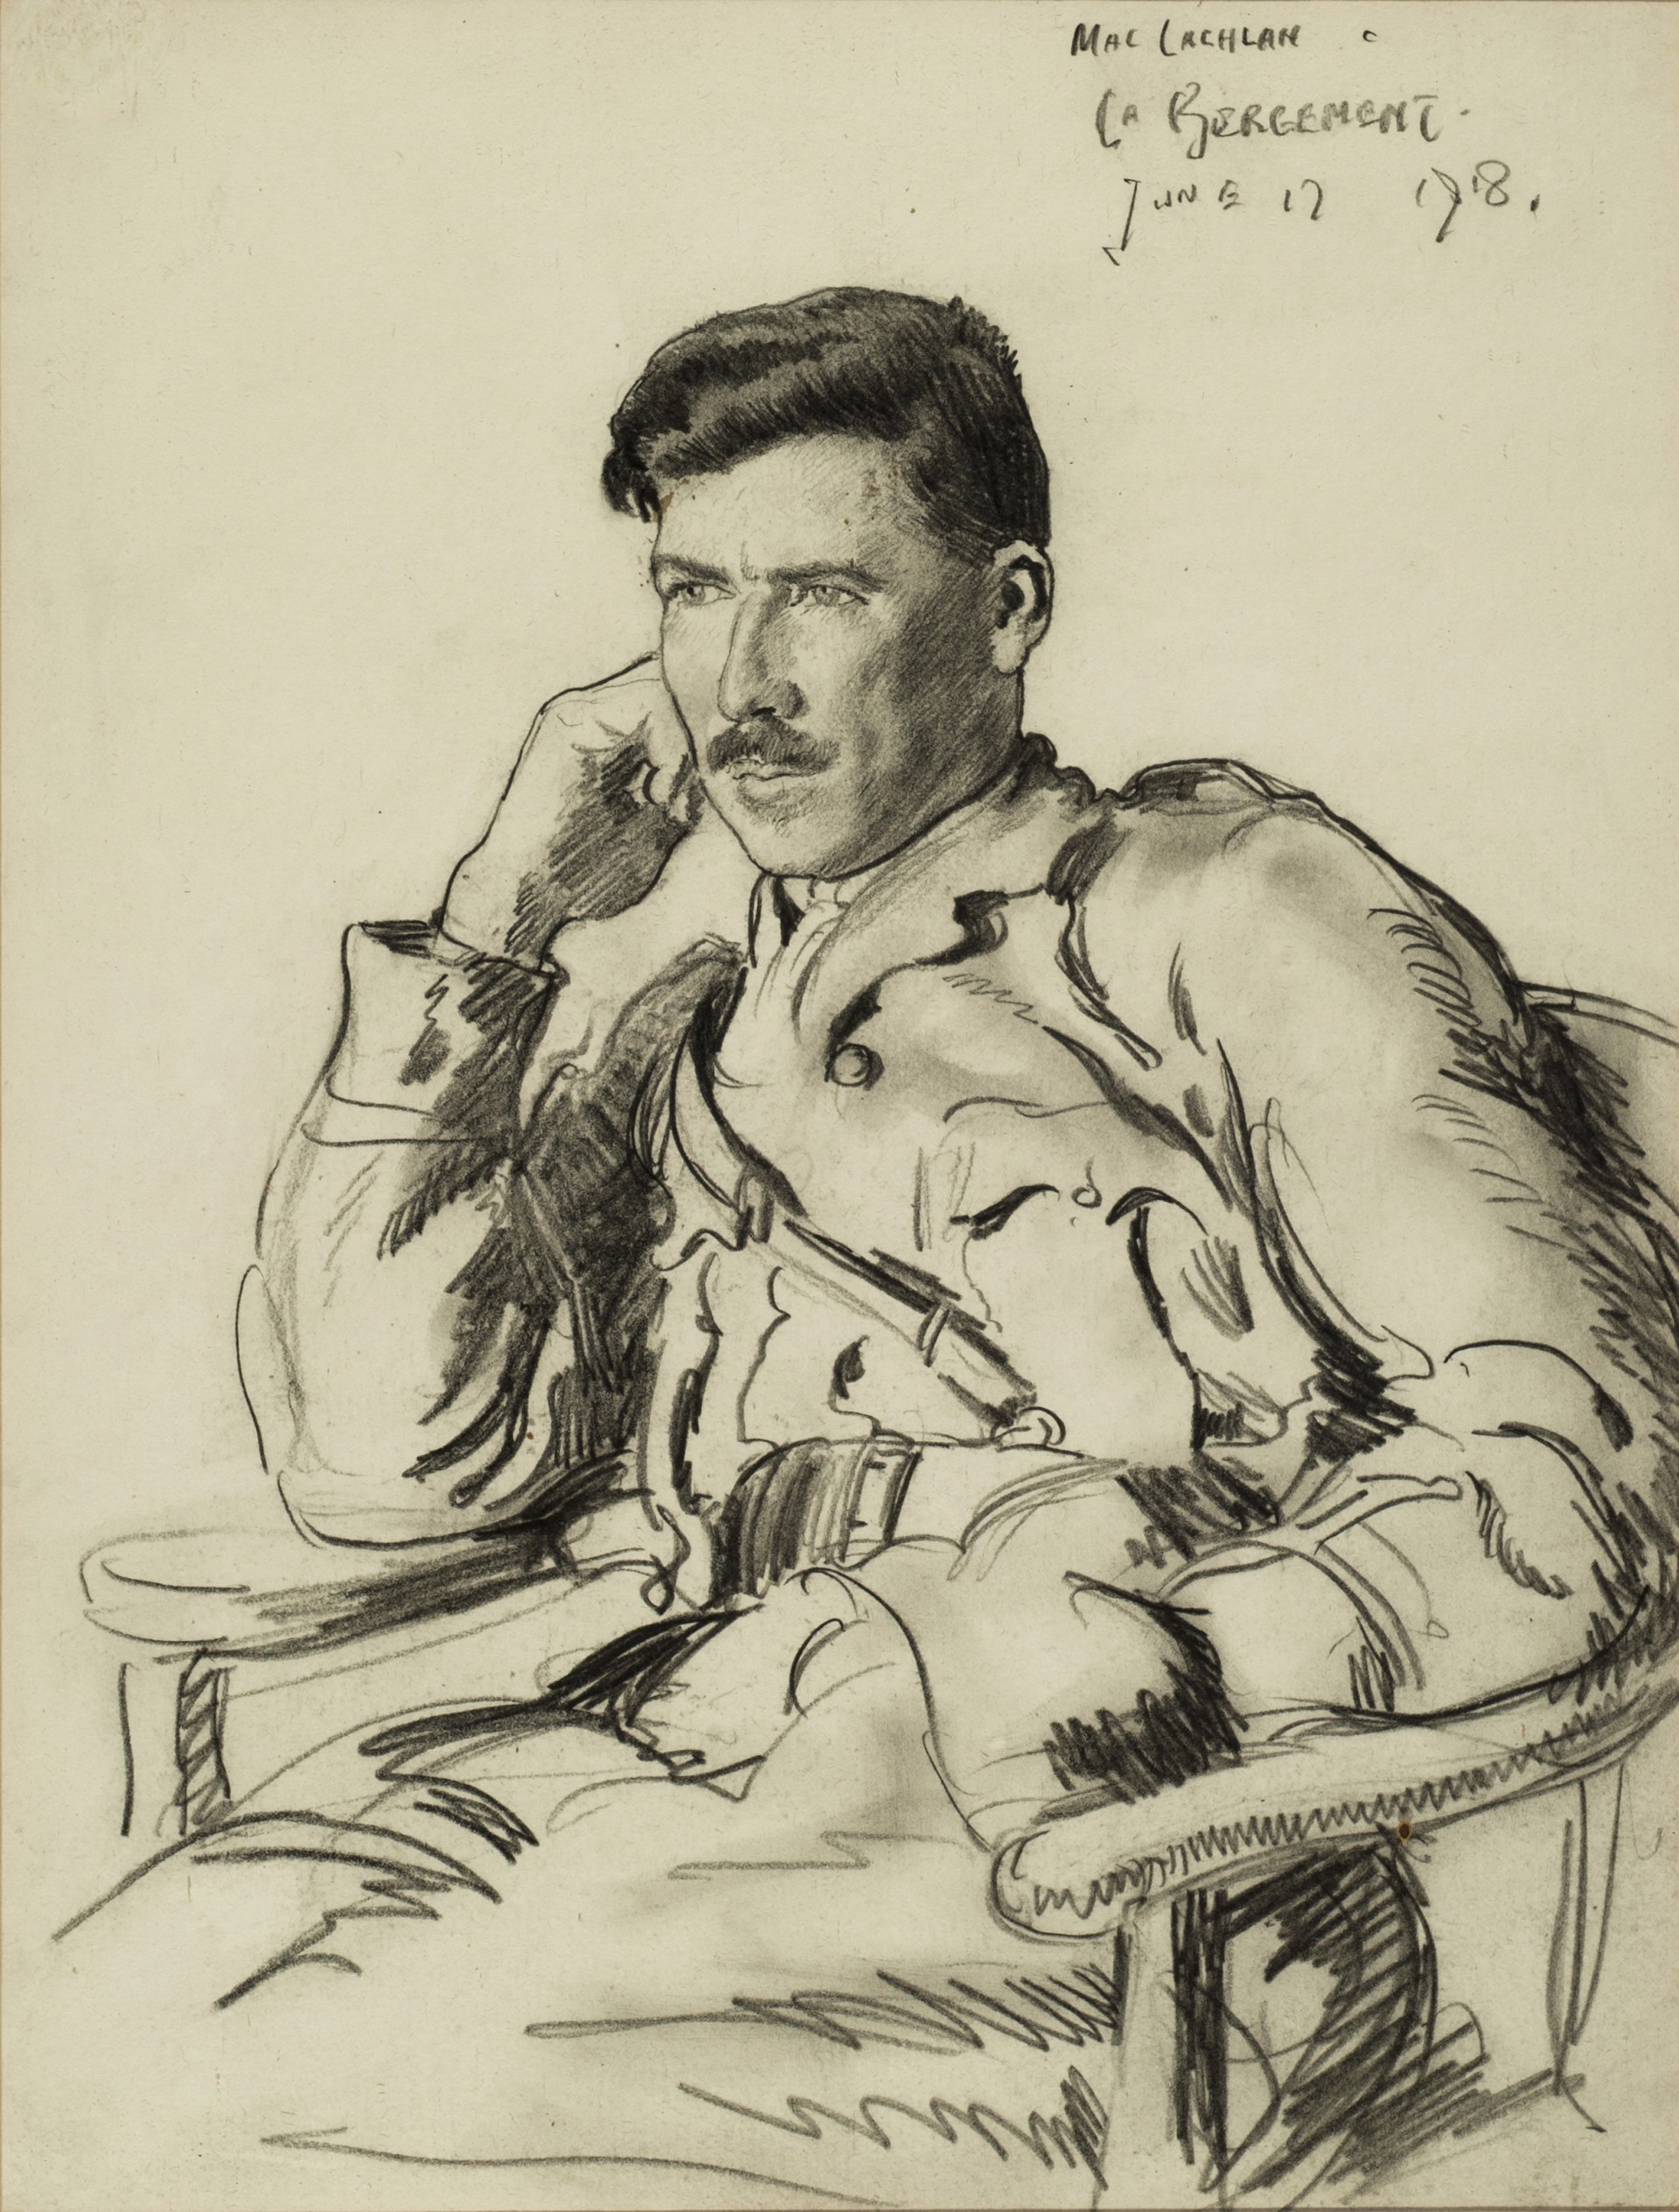 Portrait of Canadian Officer Lt. MacLachlan La Bergement, 1918 by Sir Alfred J. Munnings